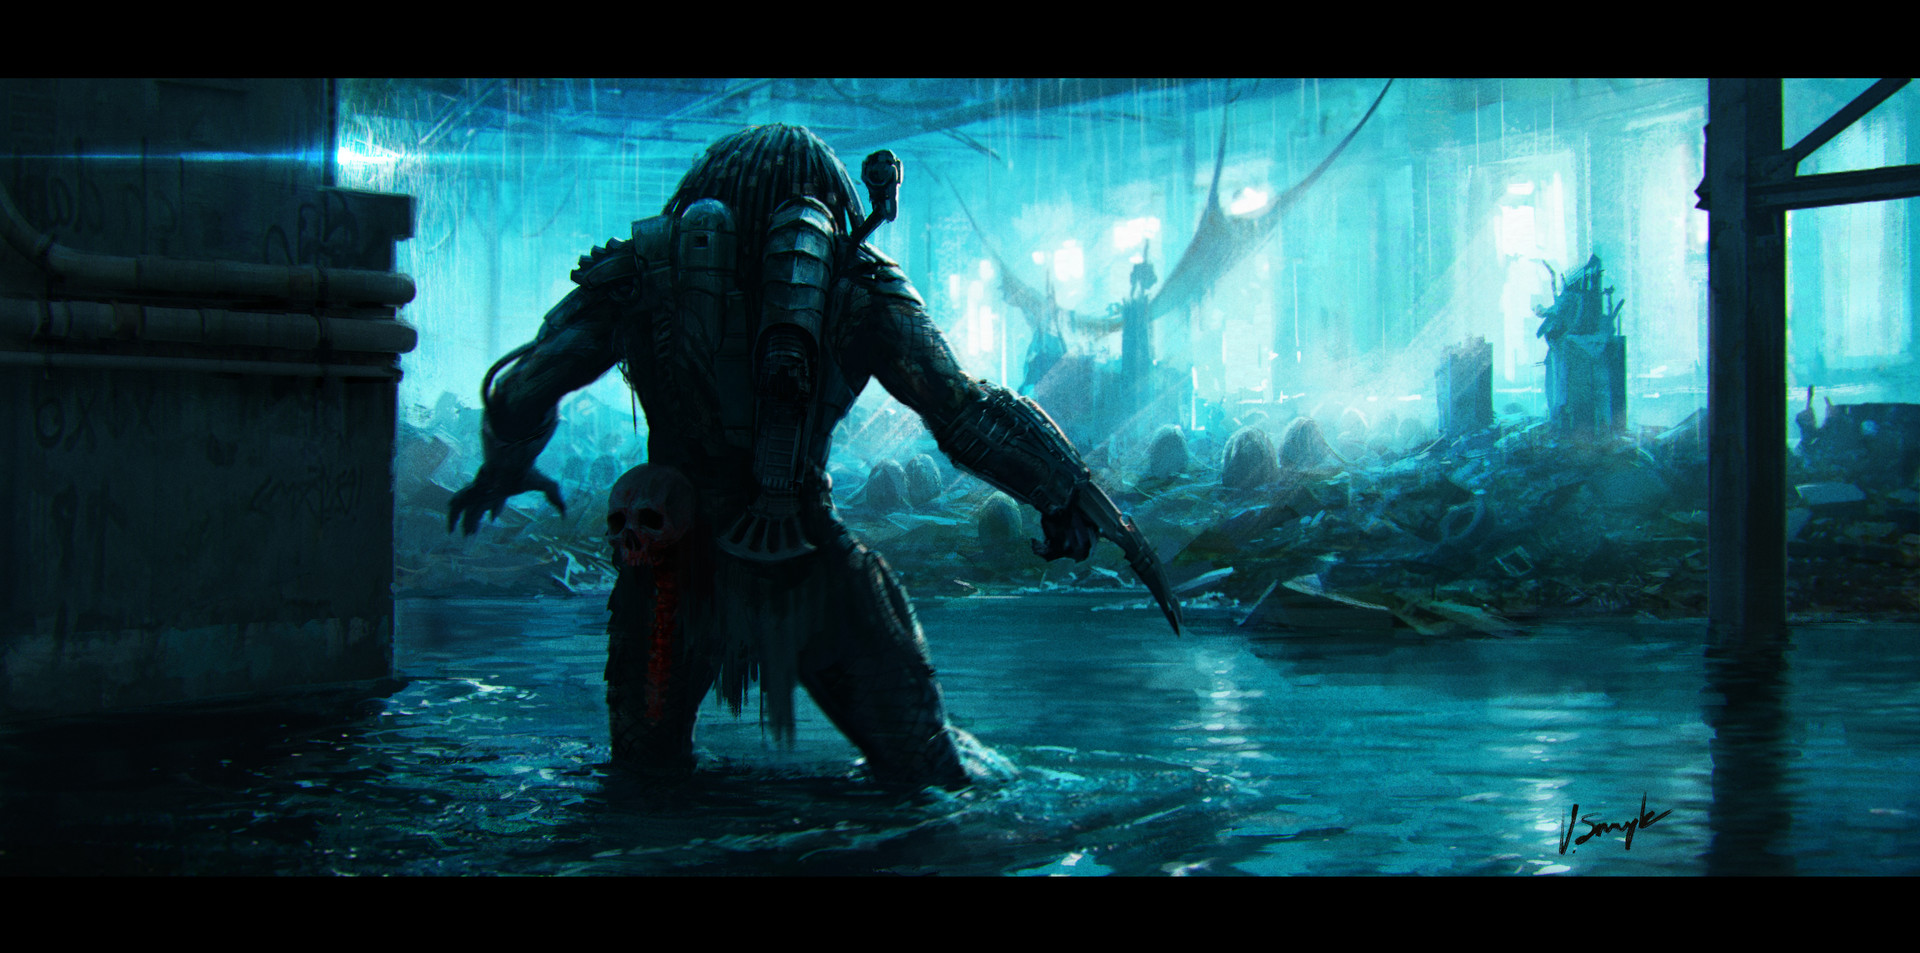 Artwork Science Fiction Predator Creature Horror Creature ArtStation Vitalii Smyk 1920x953